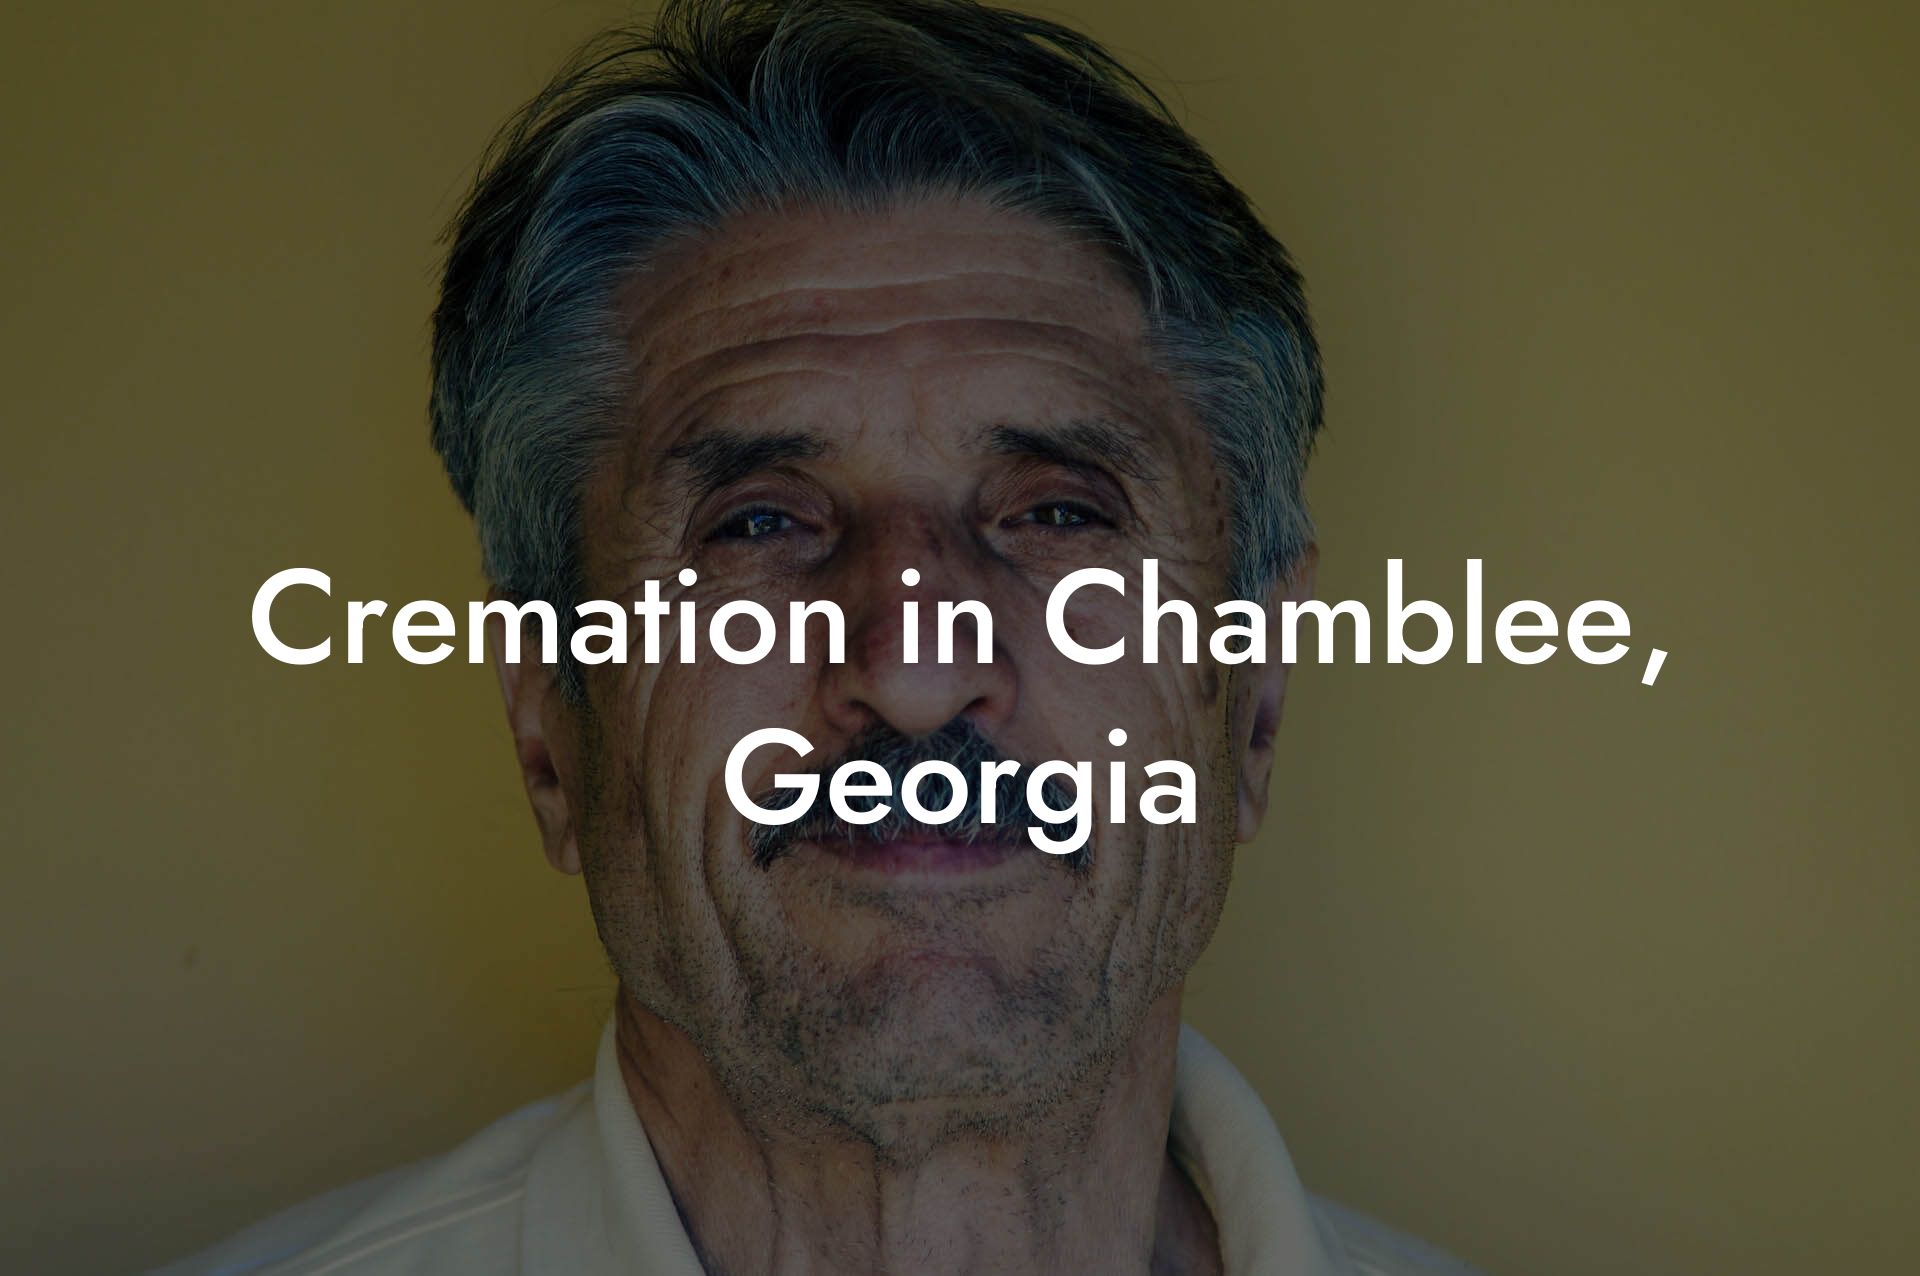 Cremation in Chamblee, Georgia